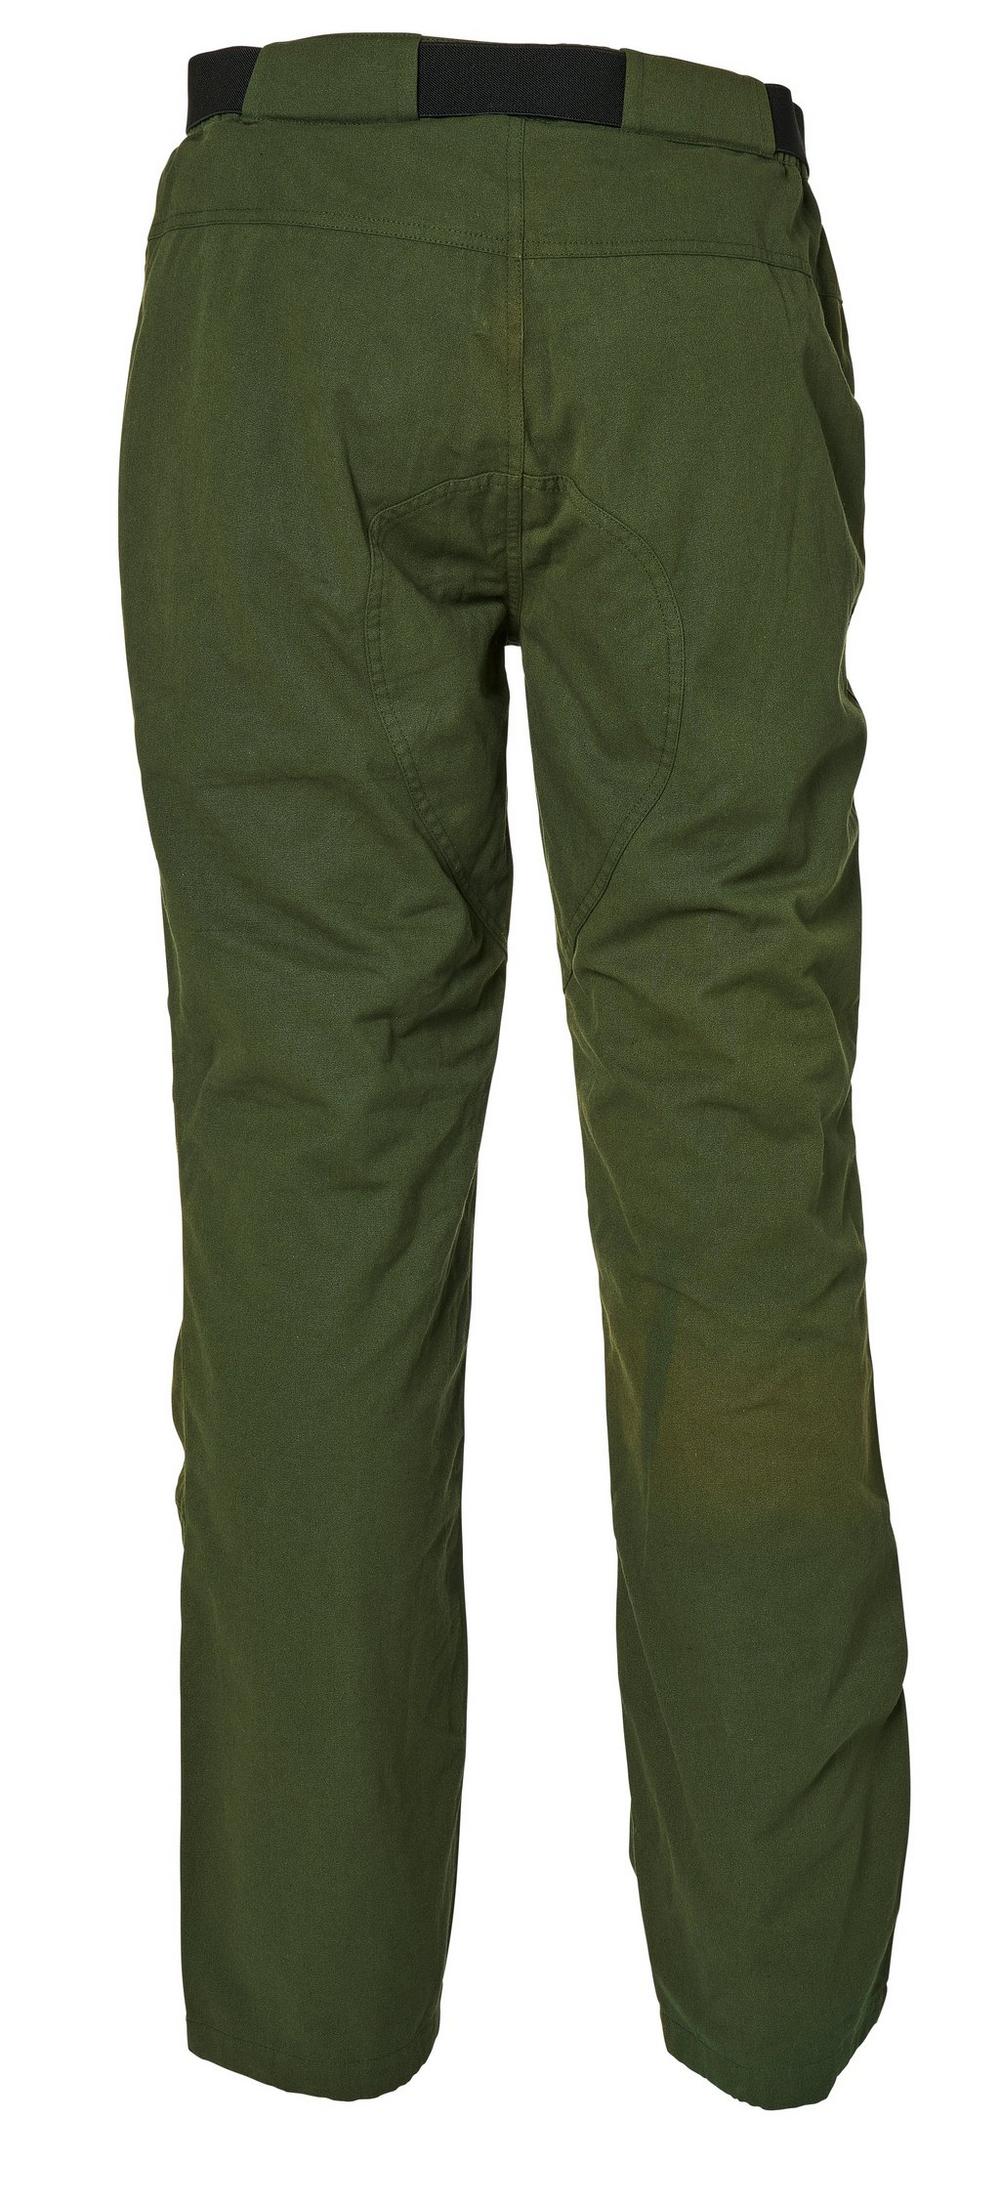 Prologic Combat Trousers Army Green Pantalón de Pesca